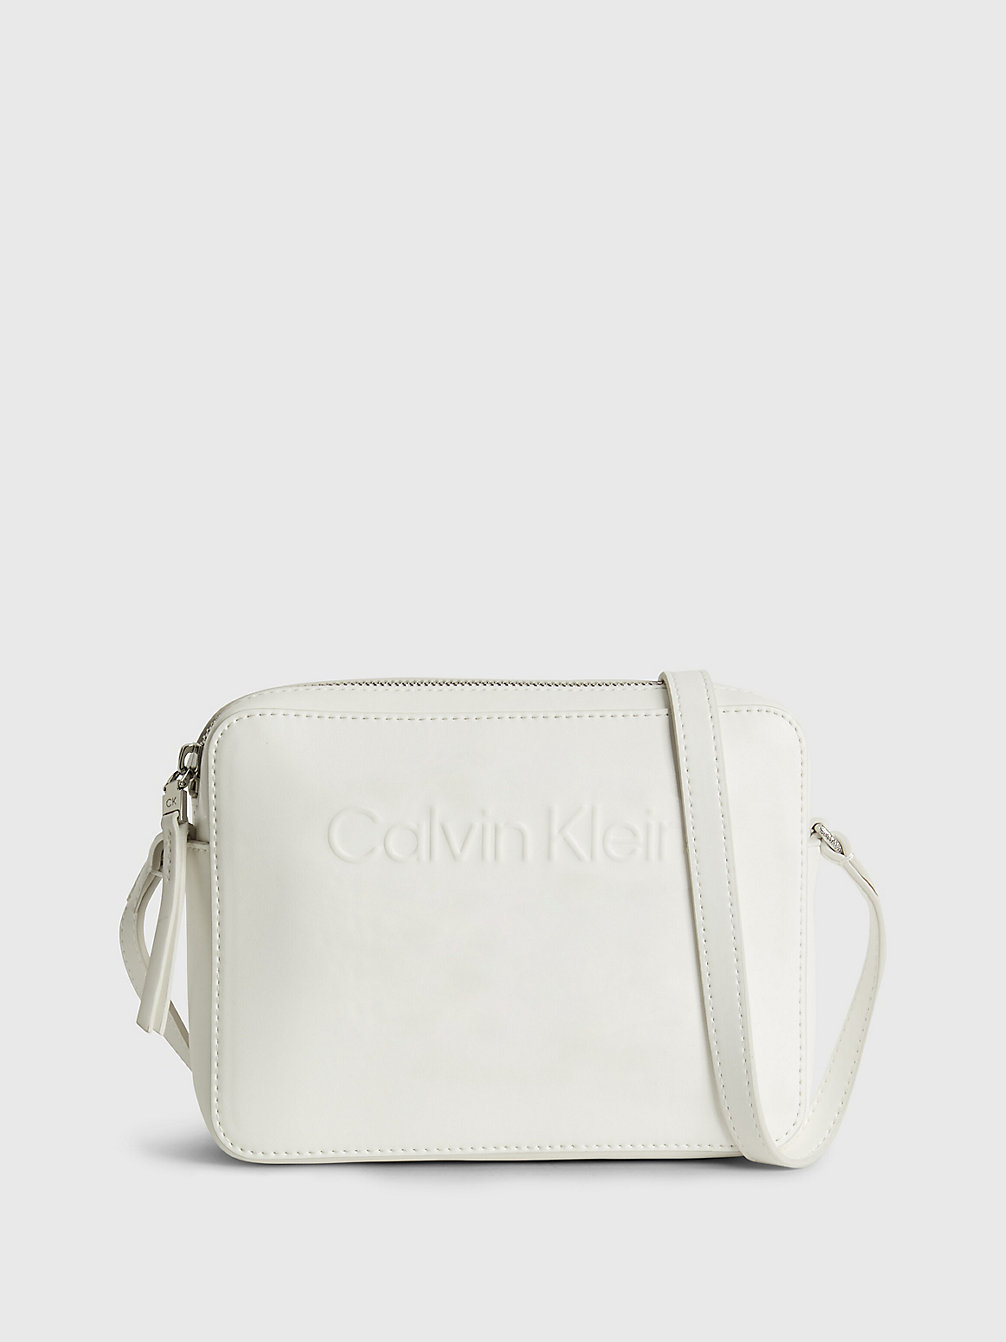 BRIGHT WHITE Crossbody Bag Aus Recyceltem Material undefined Damen Calvin Klein